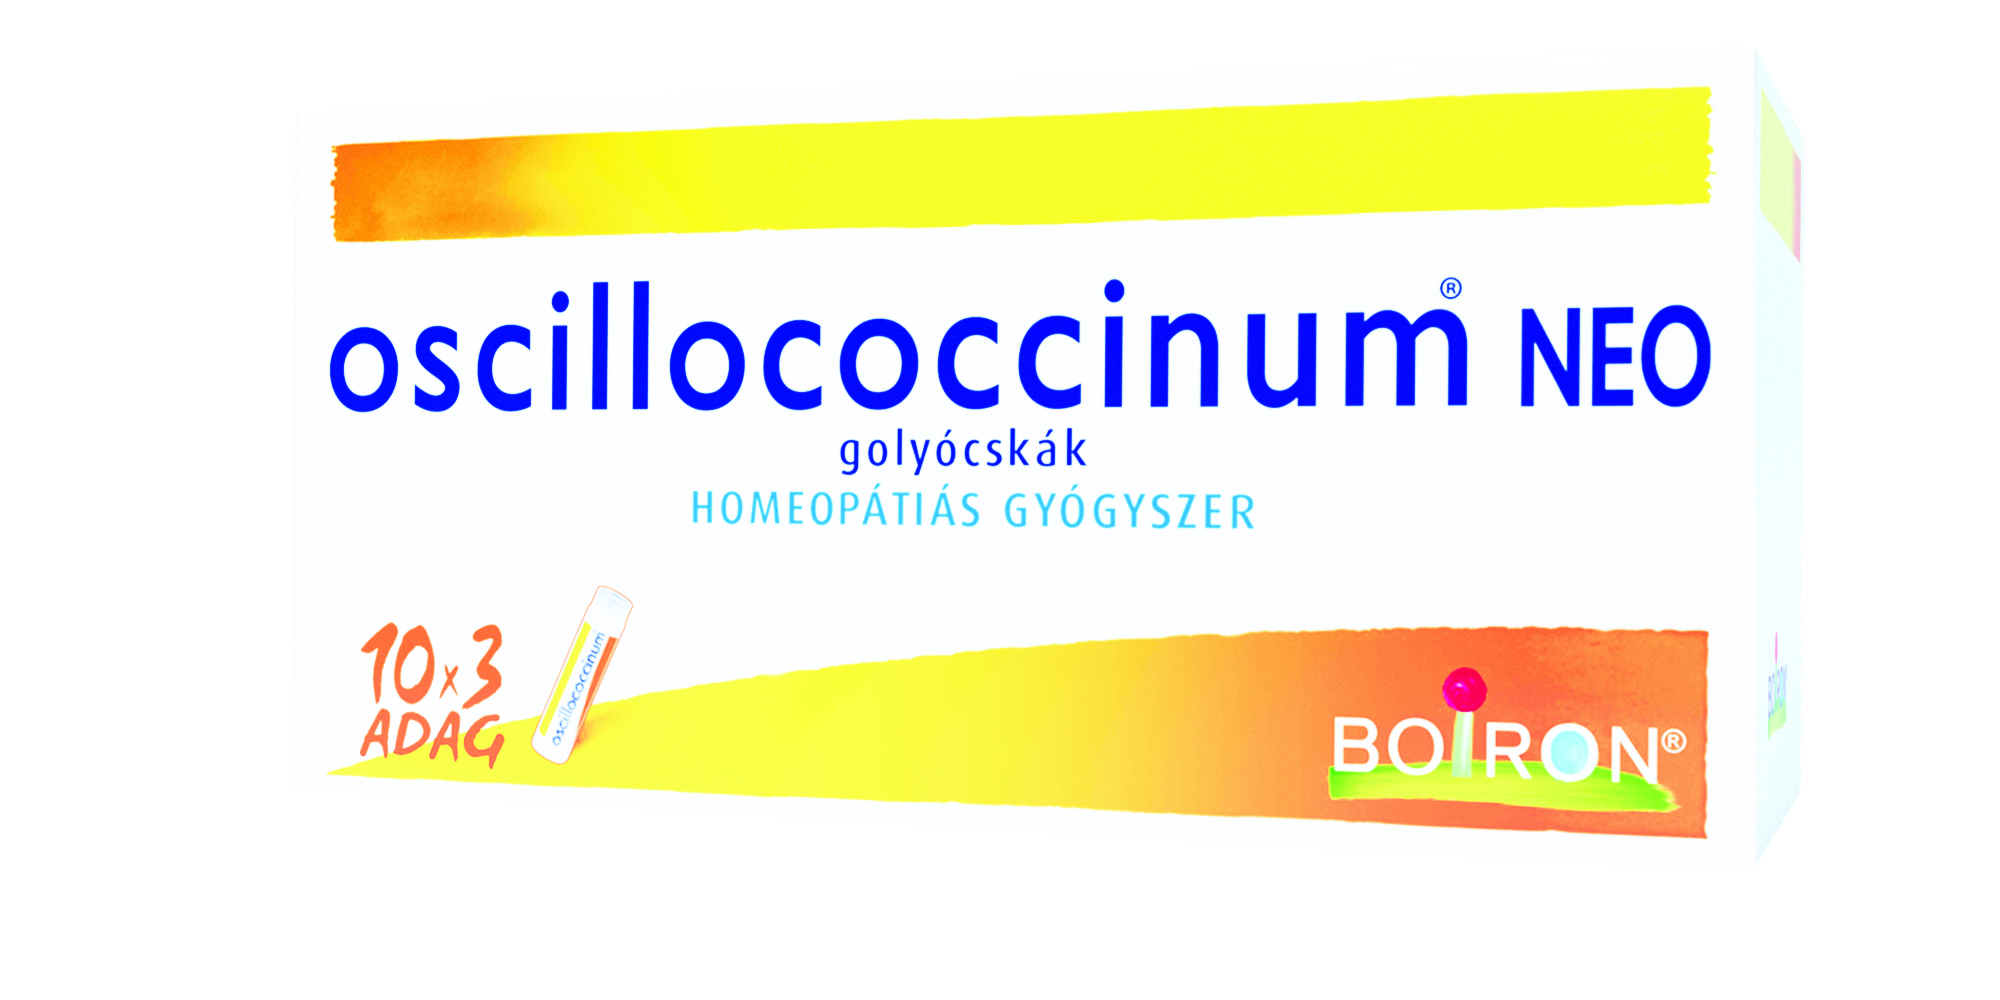 Oscillococcinum NEO golyócskák 30 adag - Boiron